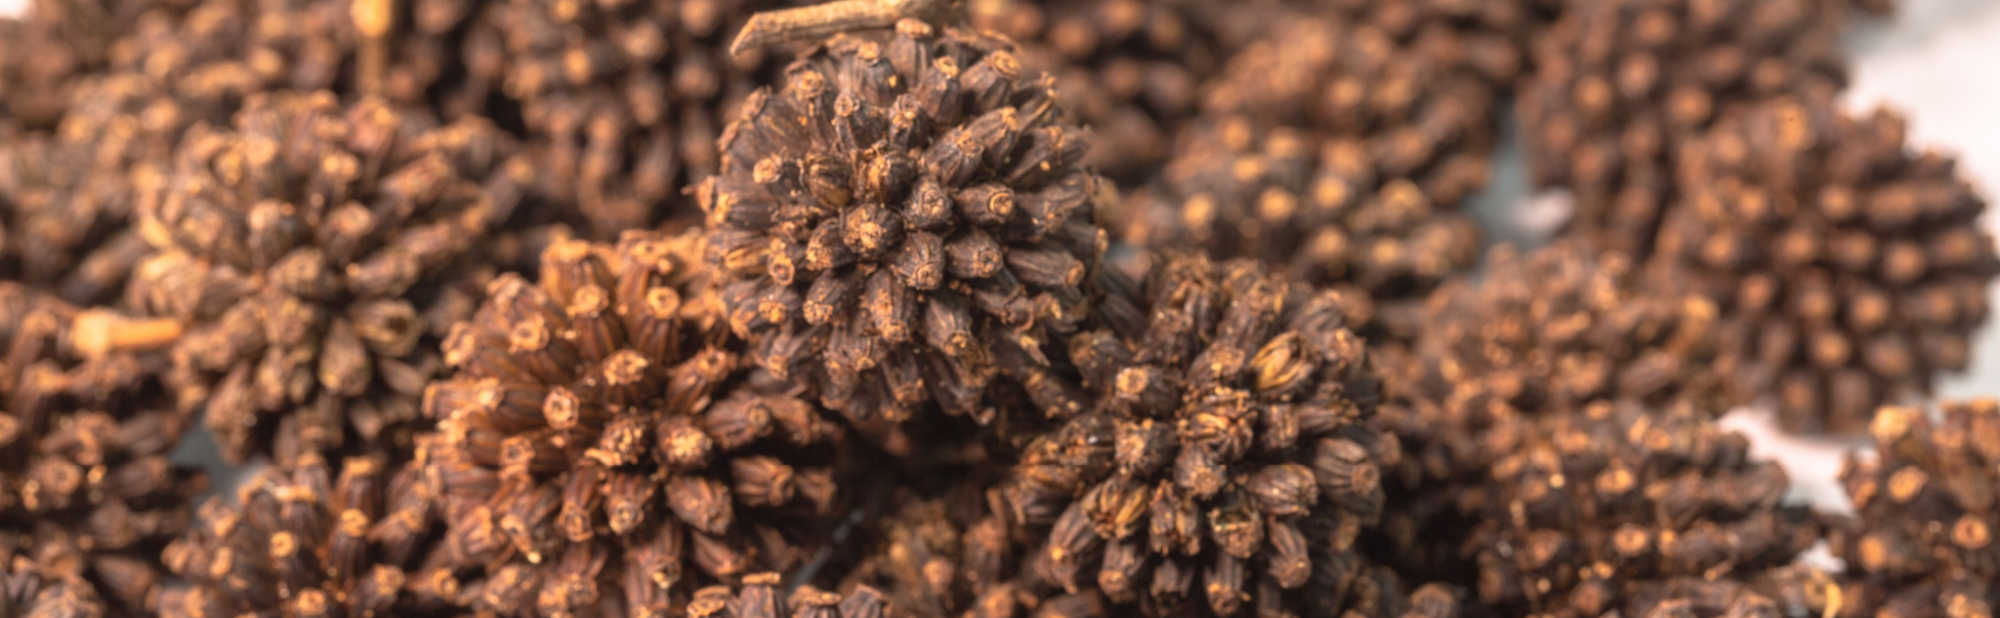 image of kratom seeds